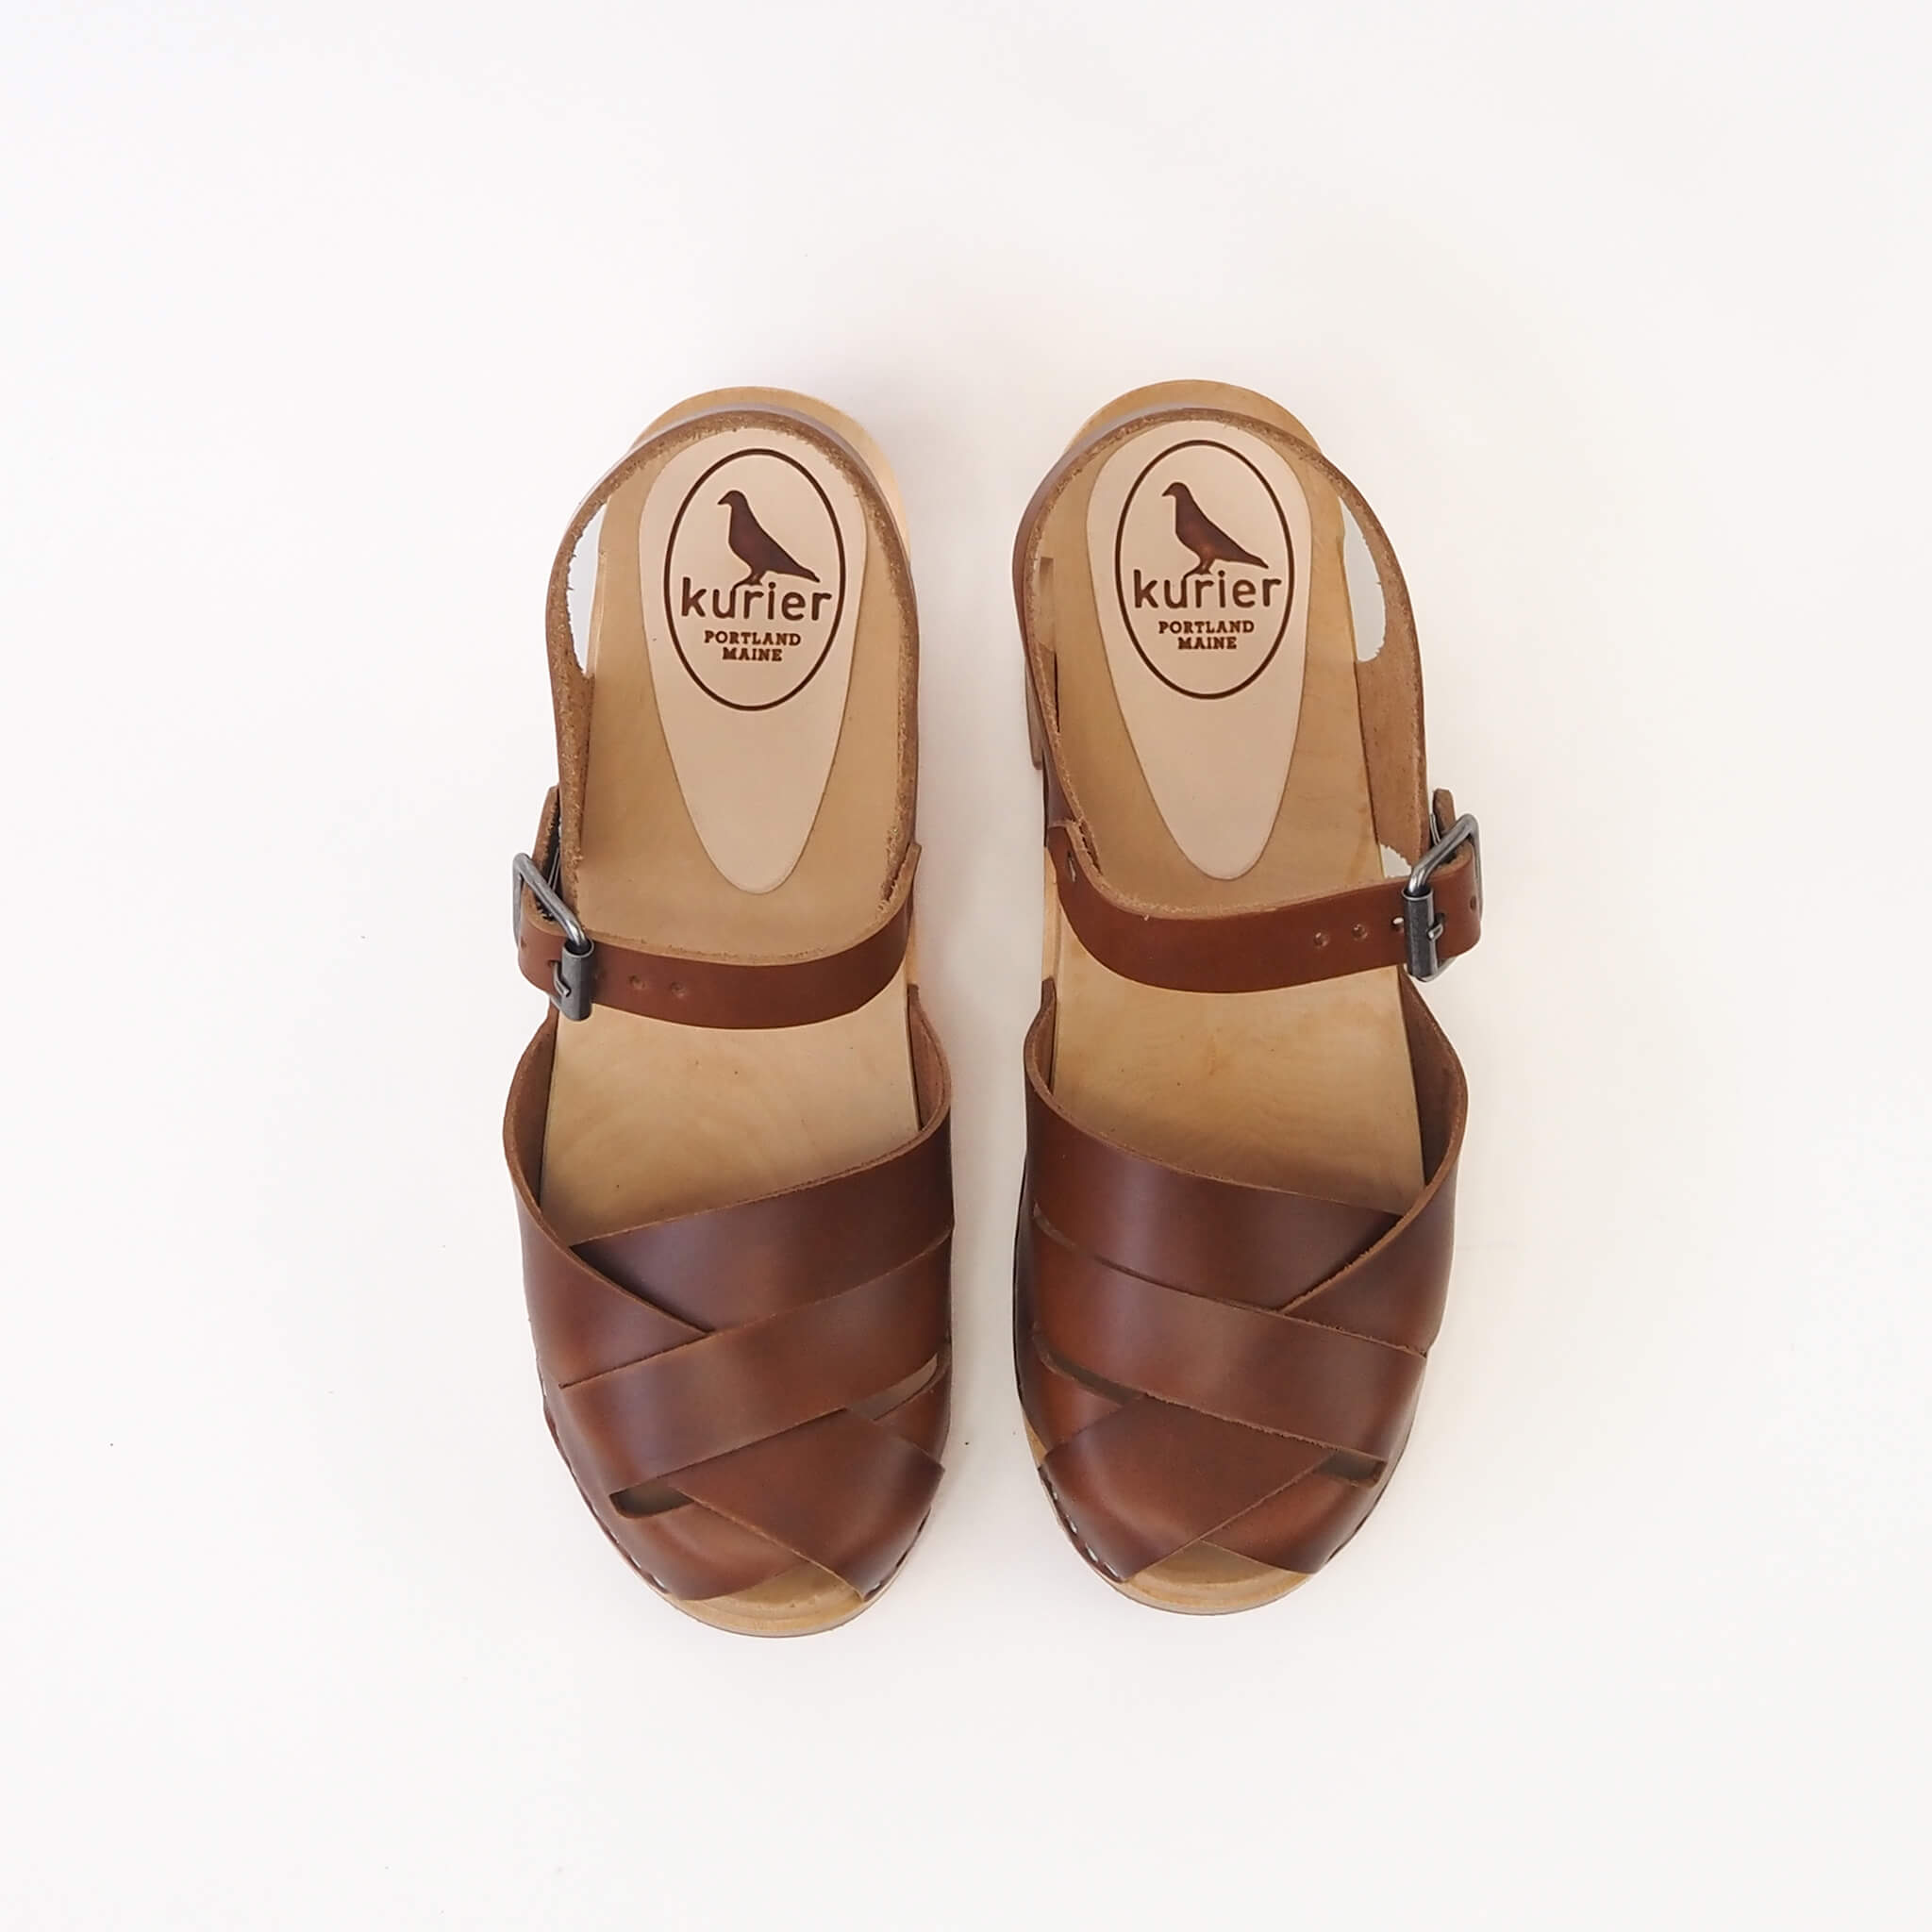 emelia clog high heel peep toe mary janesandal handmade american leather wood - pecan top view